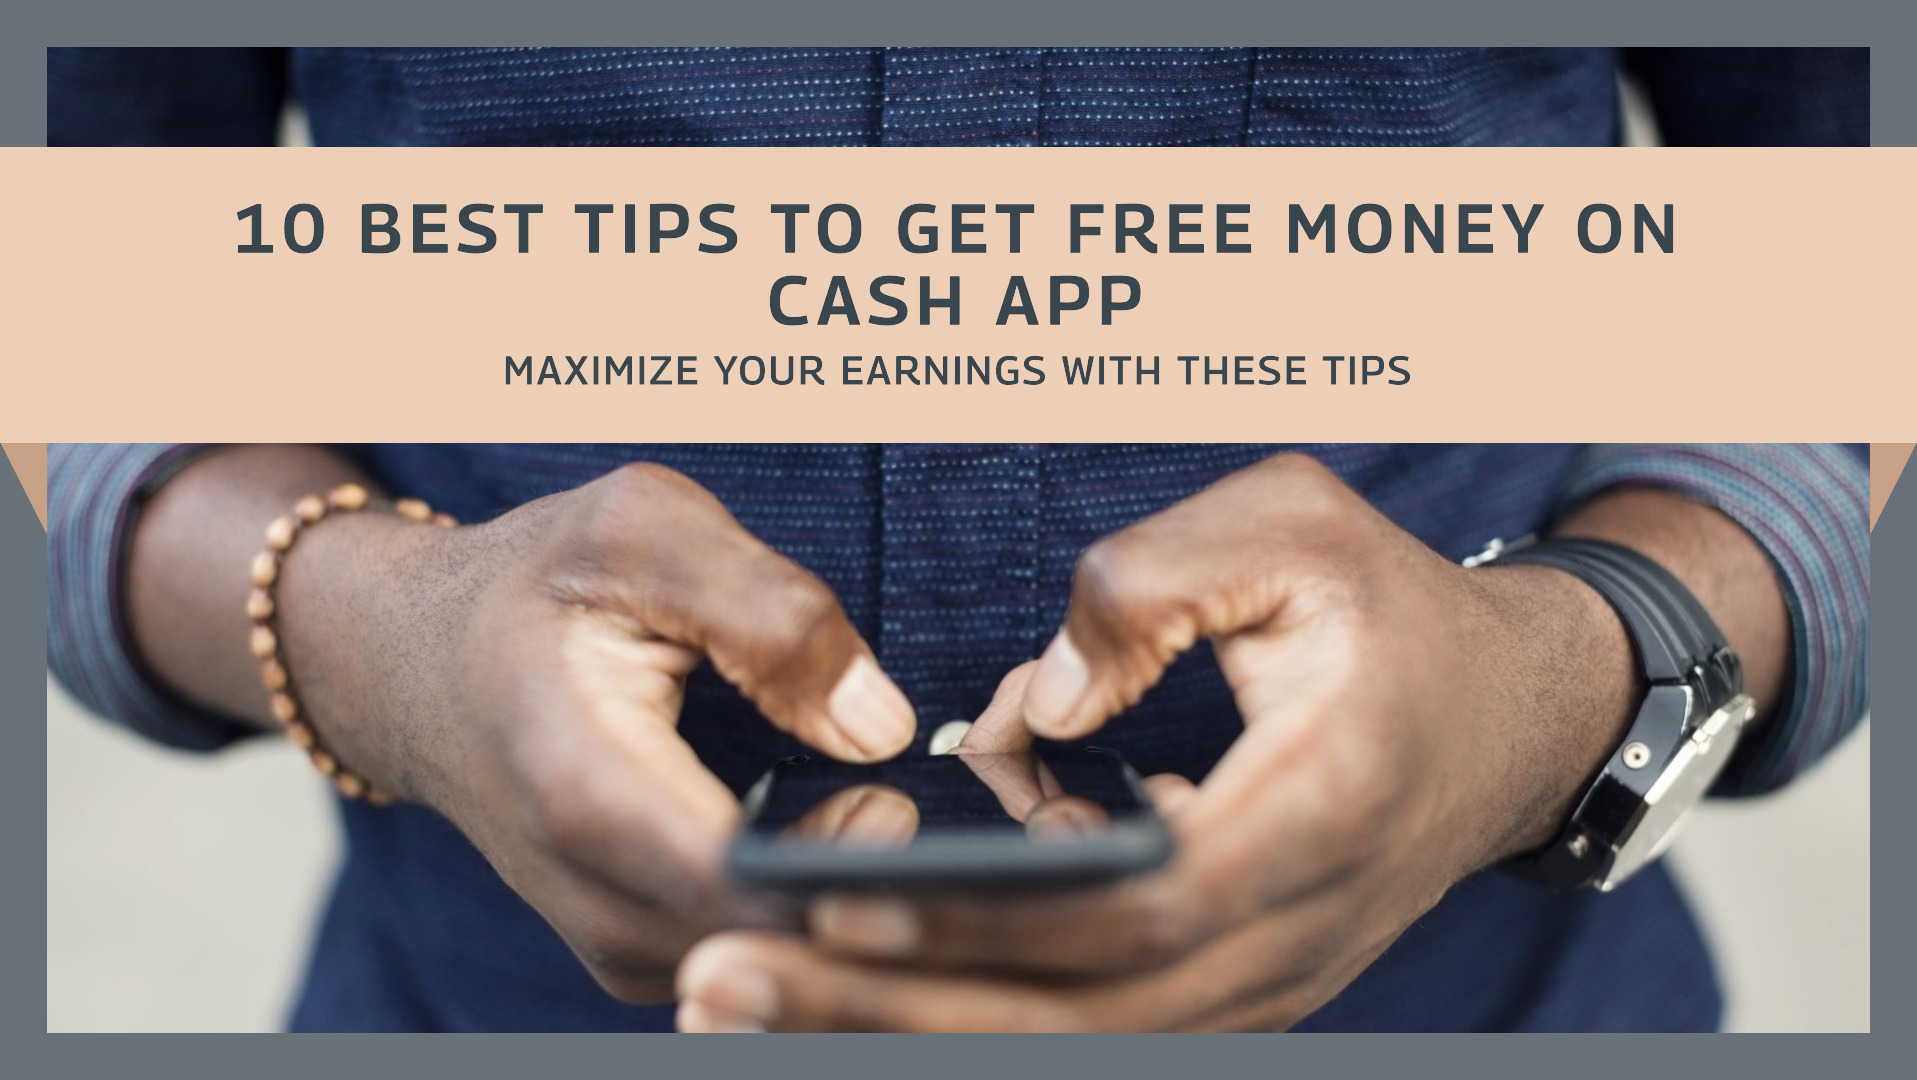 free money on cash app